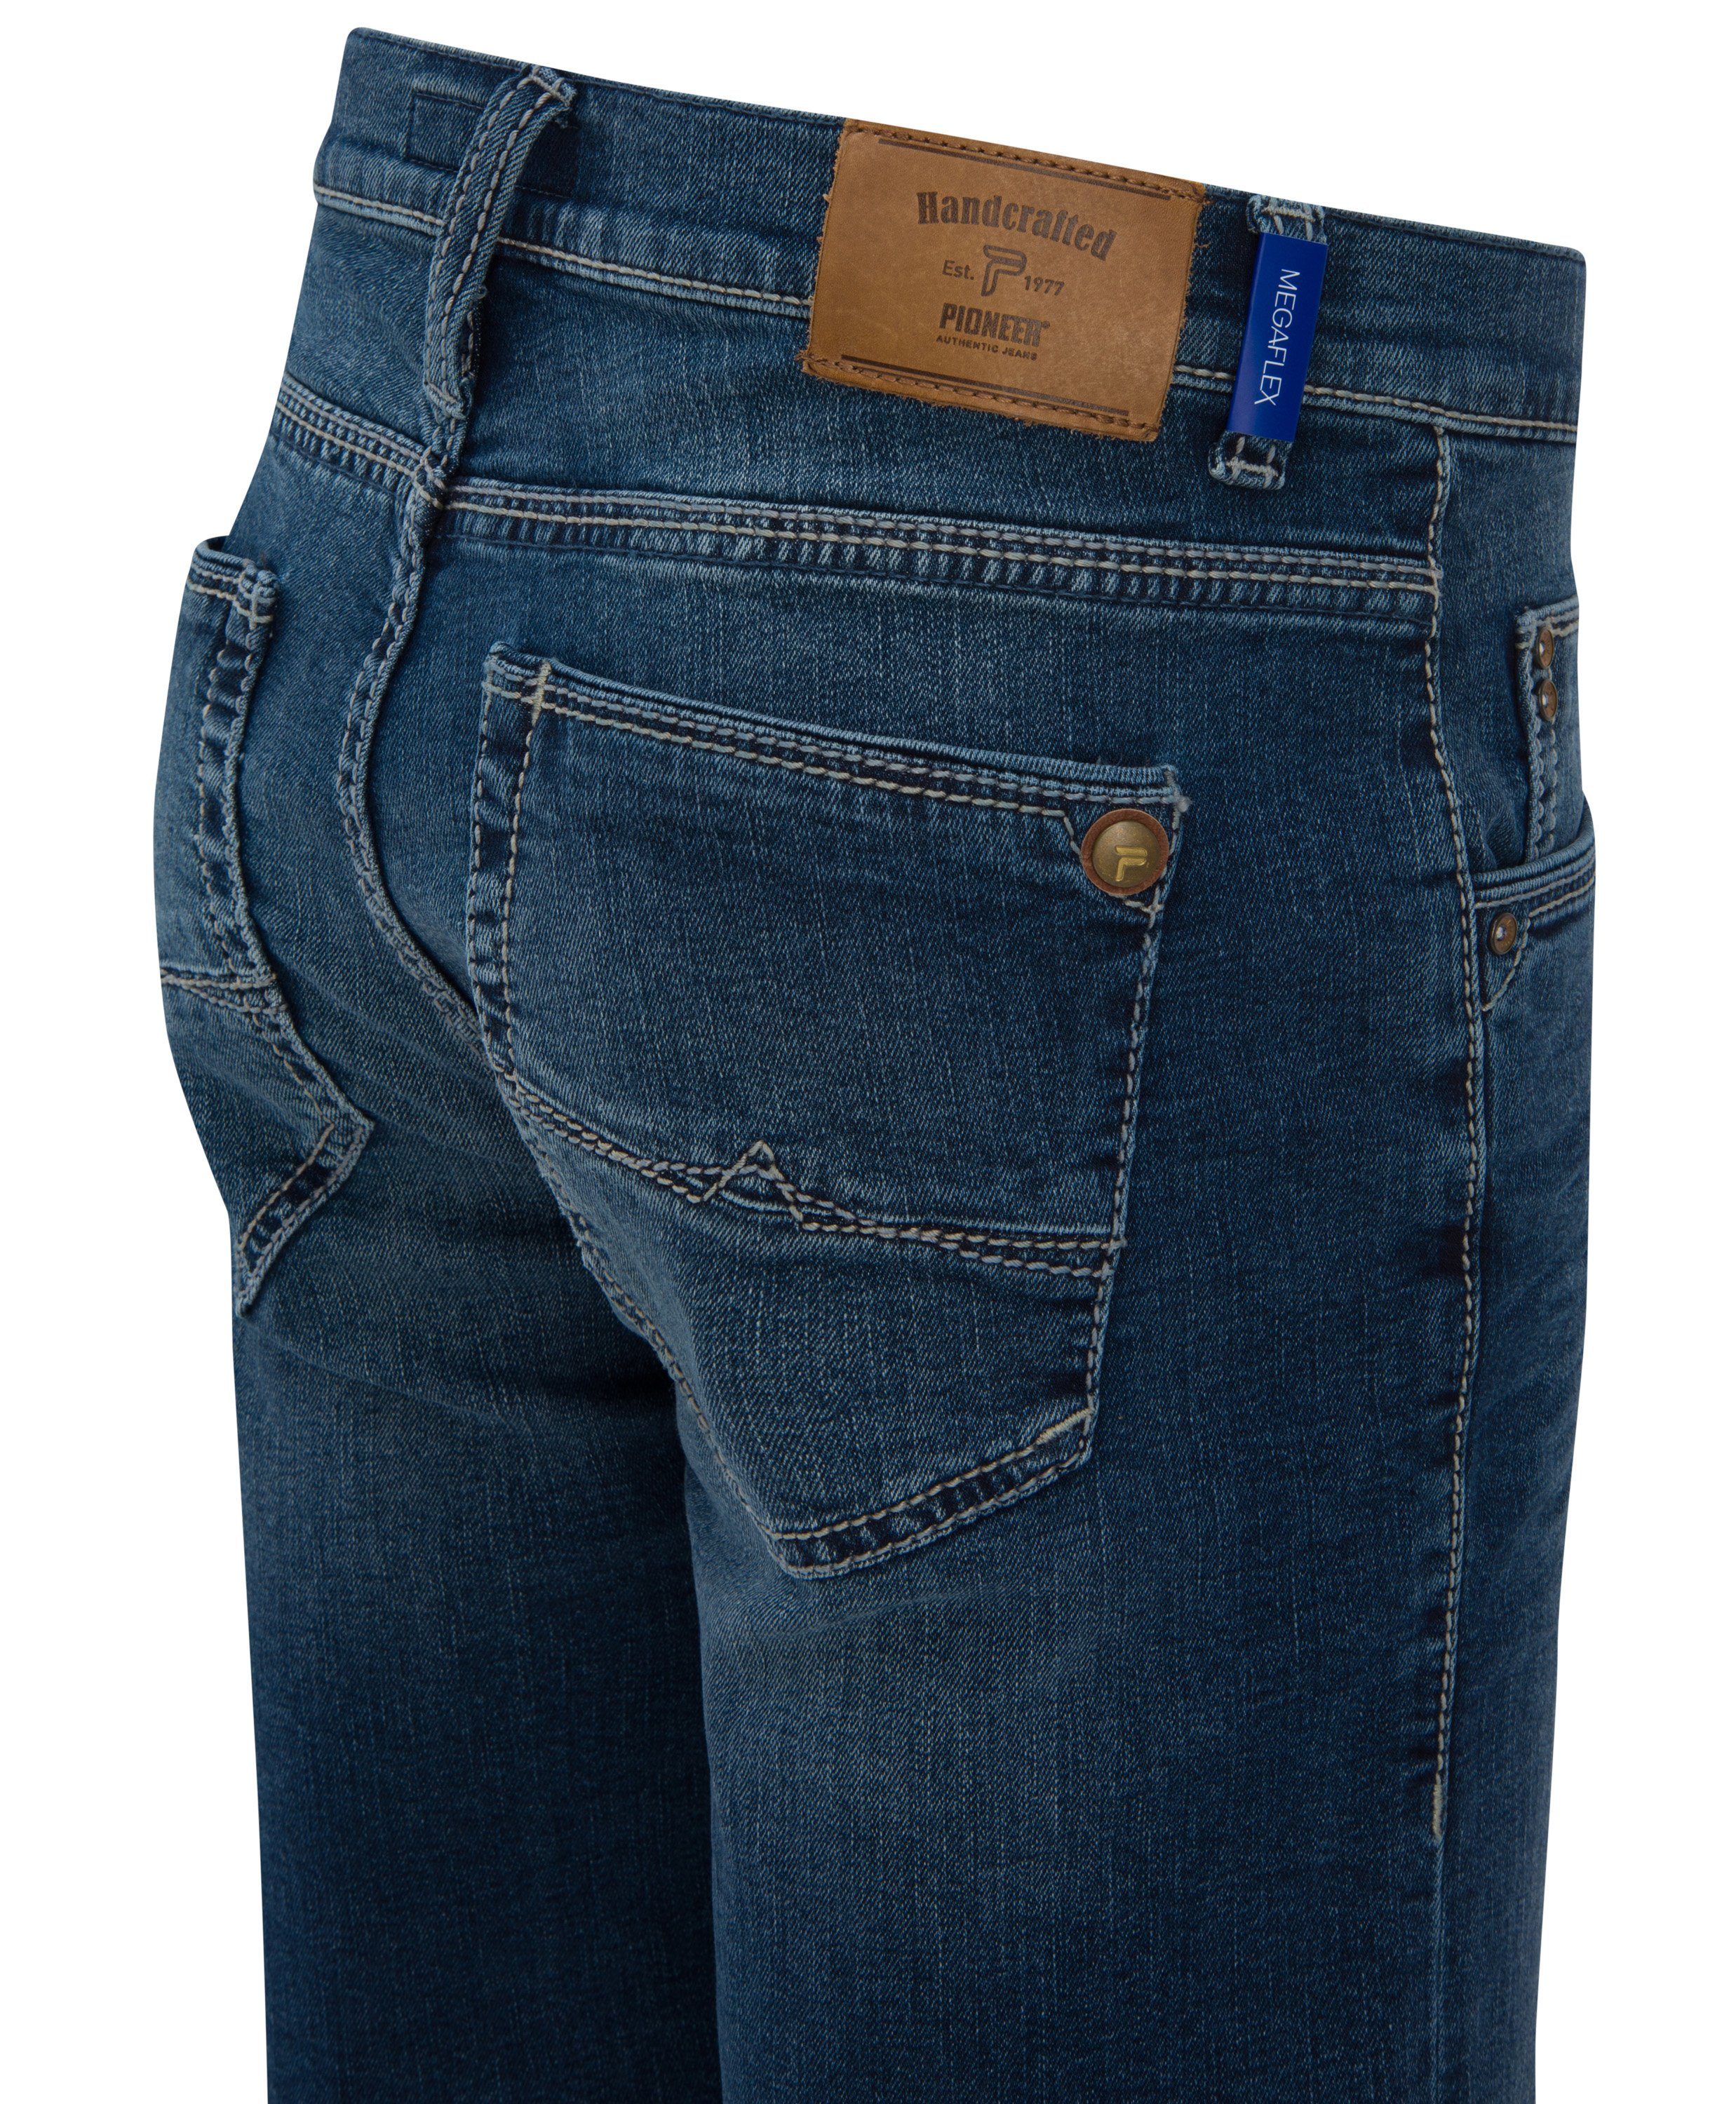 Jeans 9923.327 used Authentic 5-Pocket-Jeans SHORT 1317 MEGAFLEX blue stone DUKE - PIONEER Pioneer HANDCRAFTE